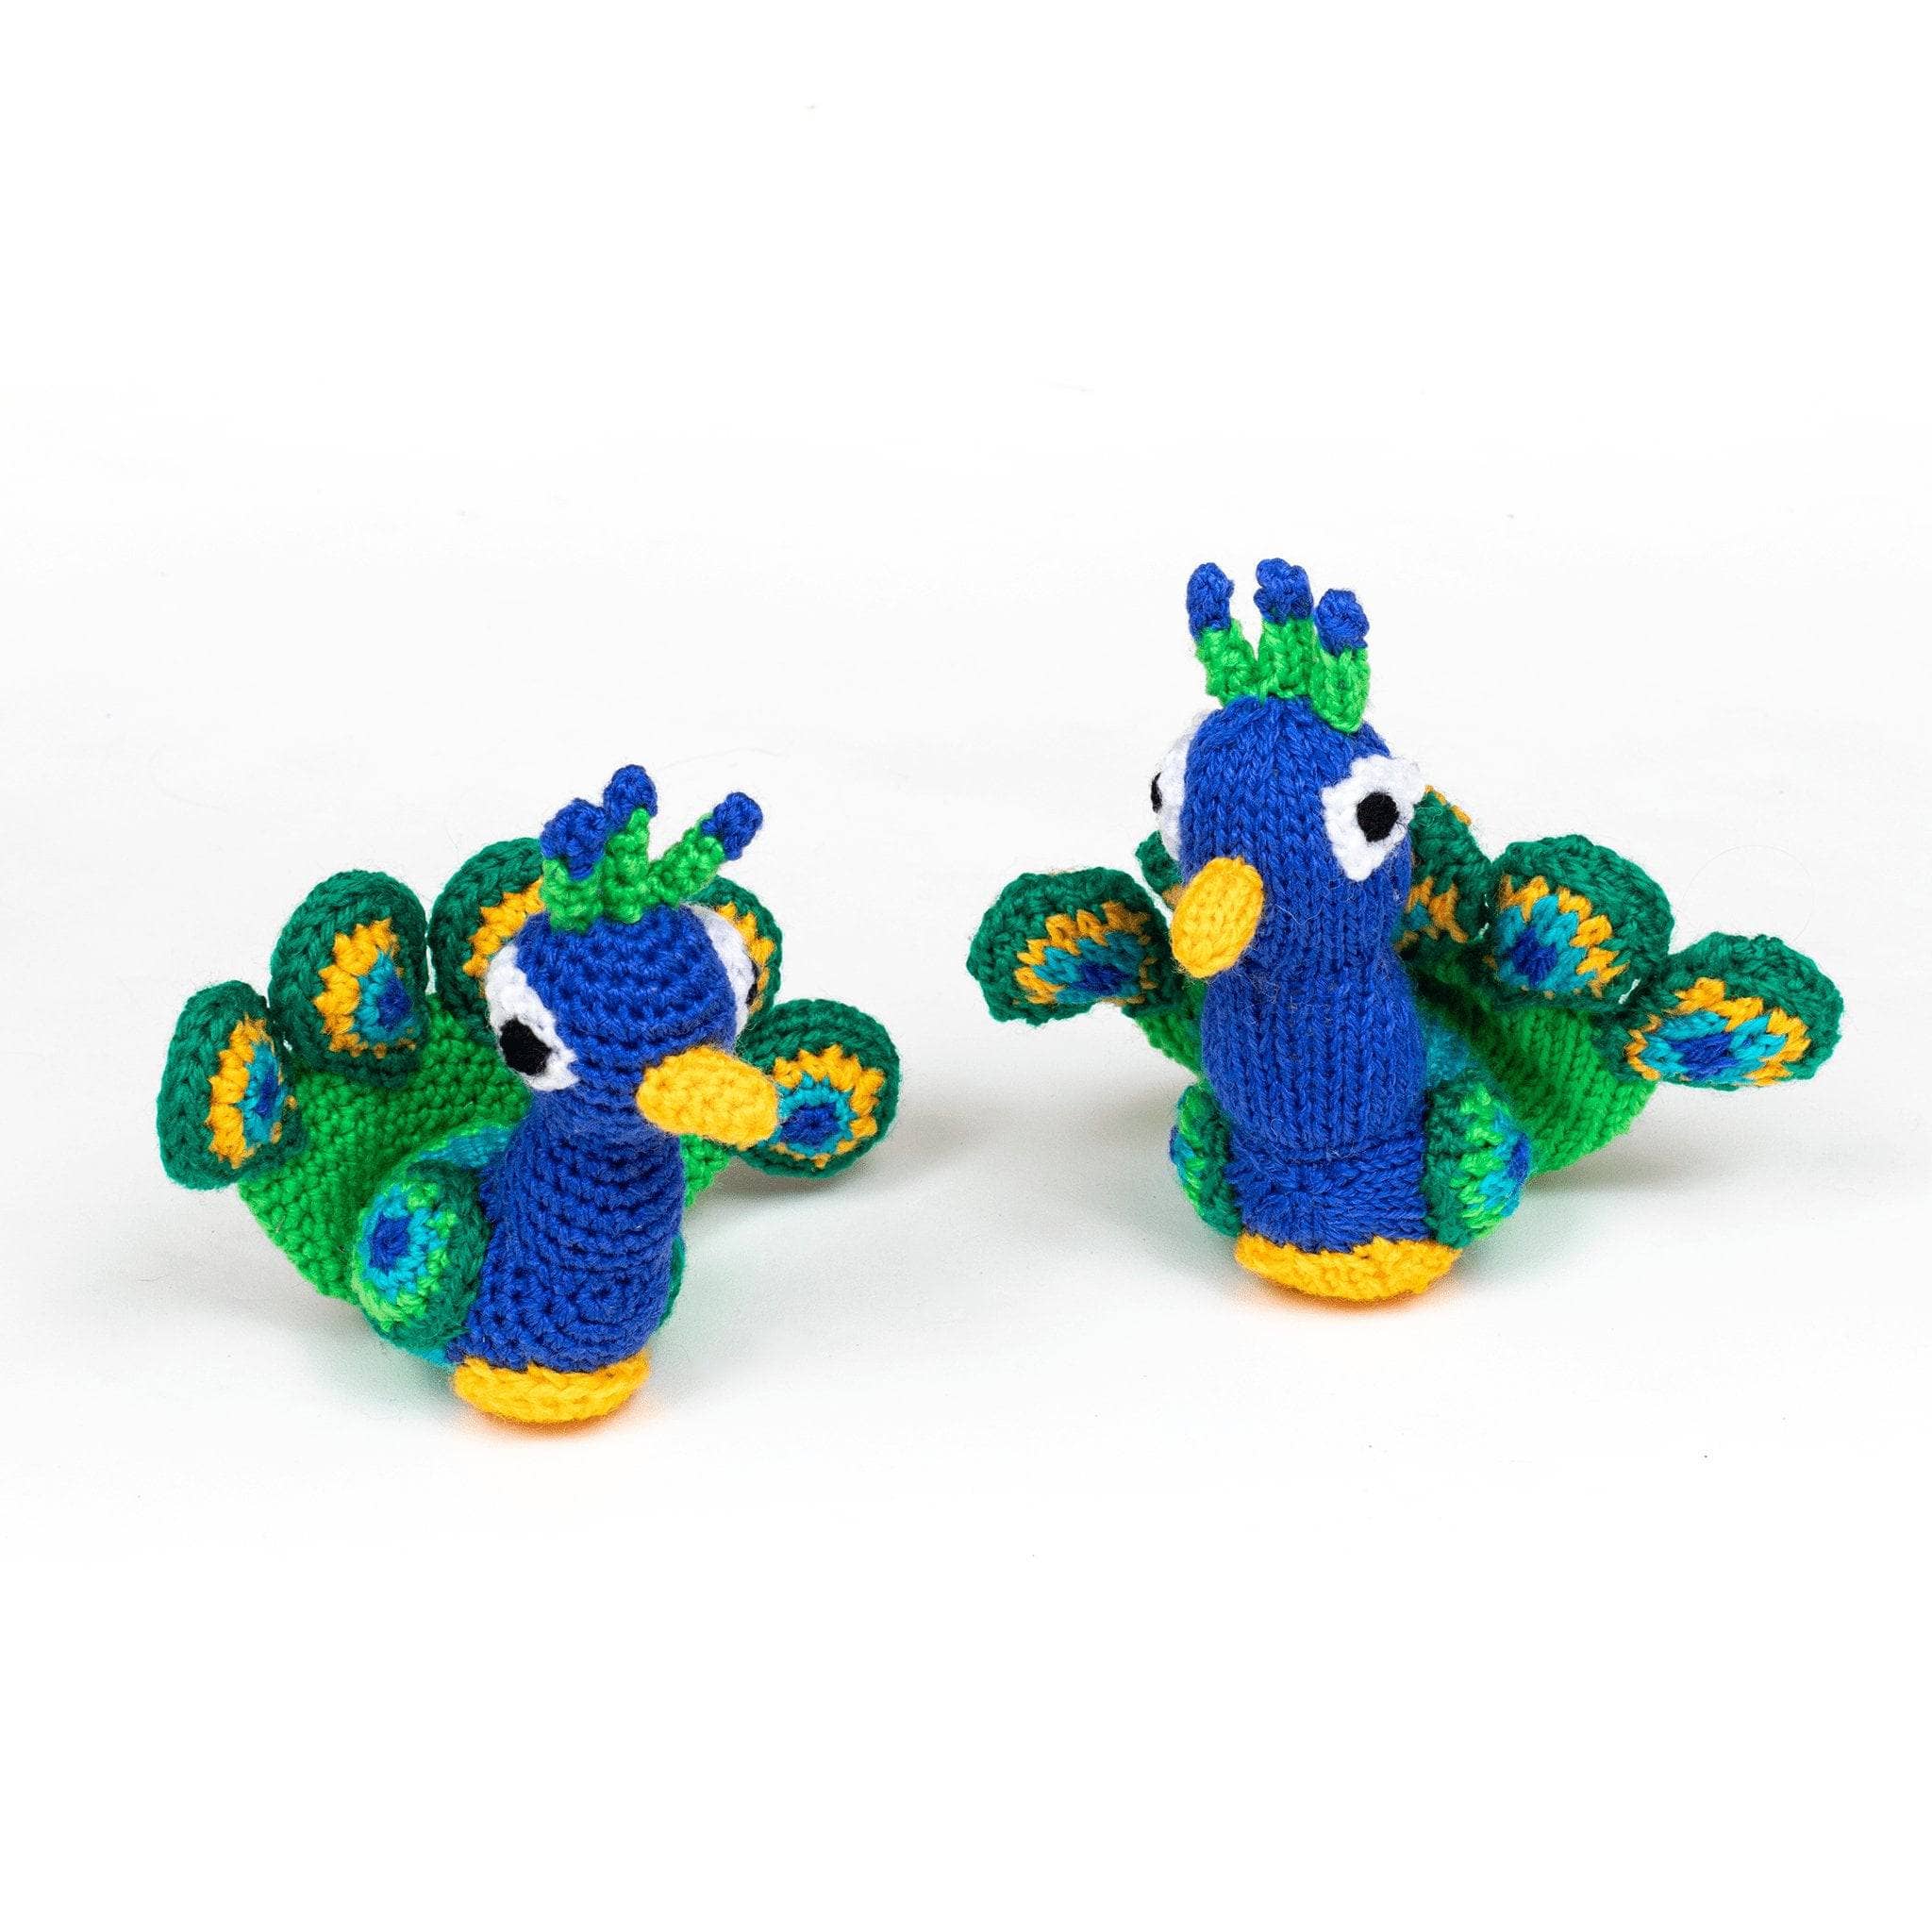 Knit & Crochet Amigurumi Kits - Peacock